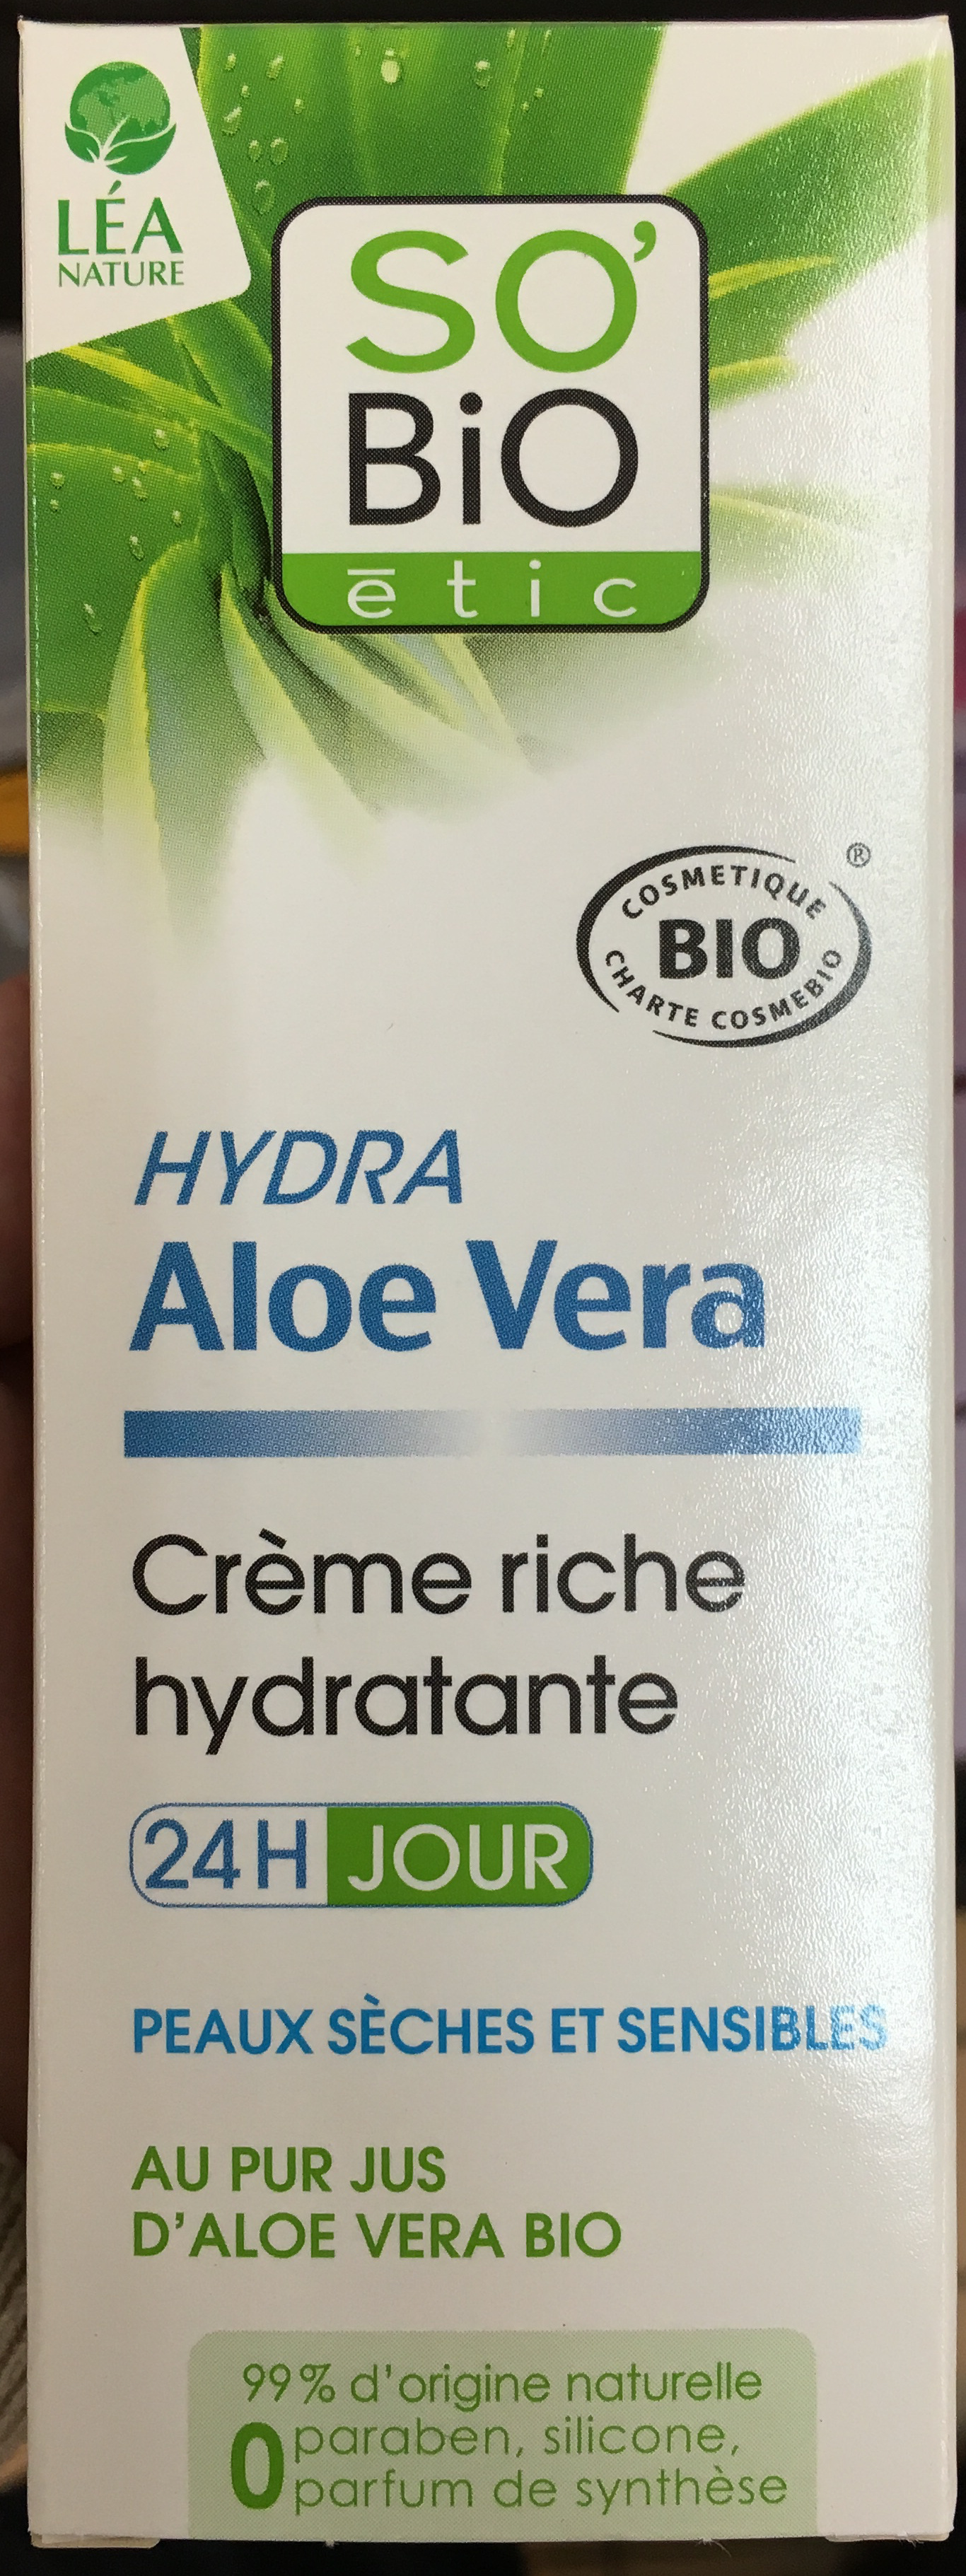 Hydra Aloe Vera Crème riche hydratante - Produkt - fr